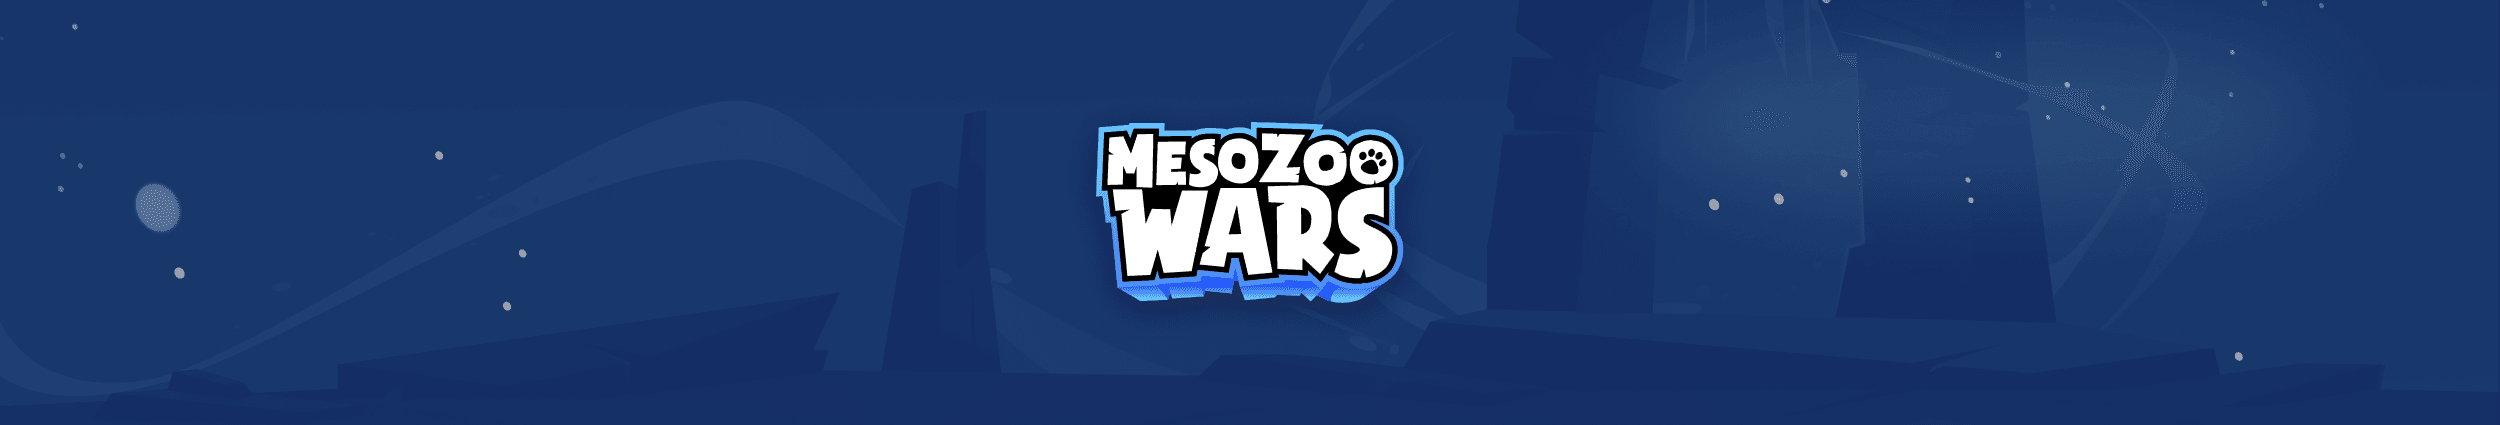 MesoZooWars banner